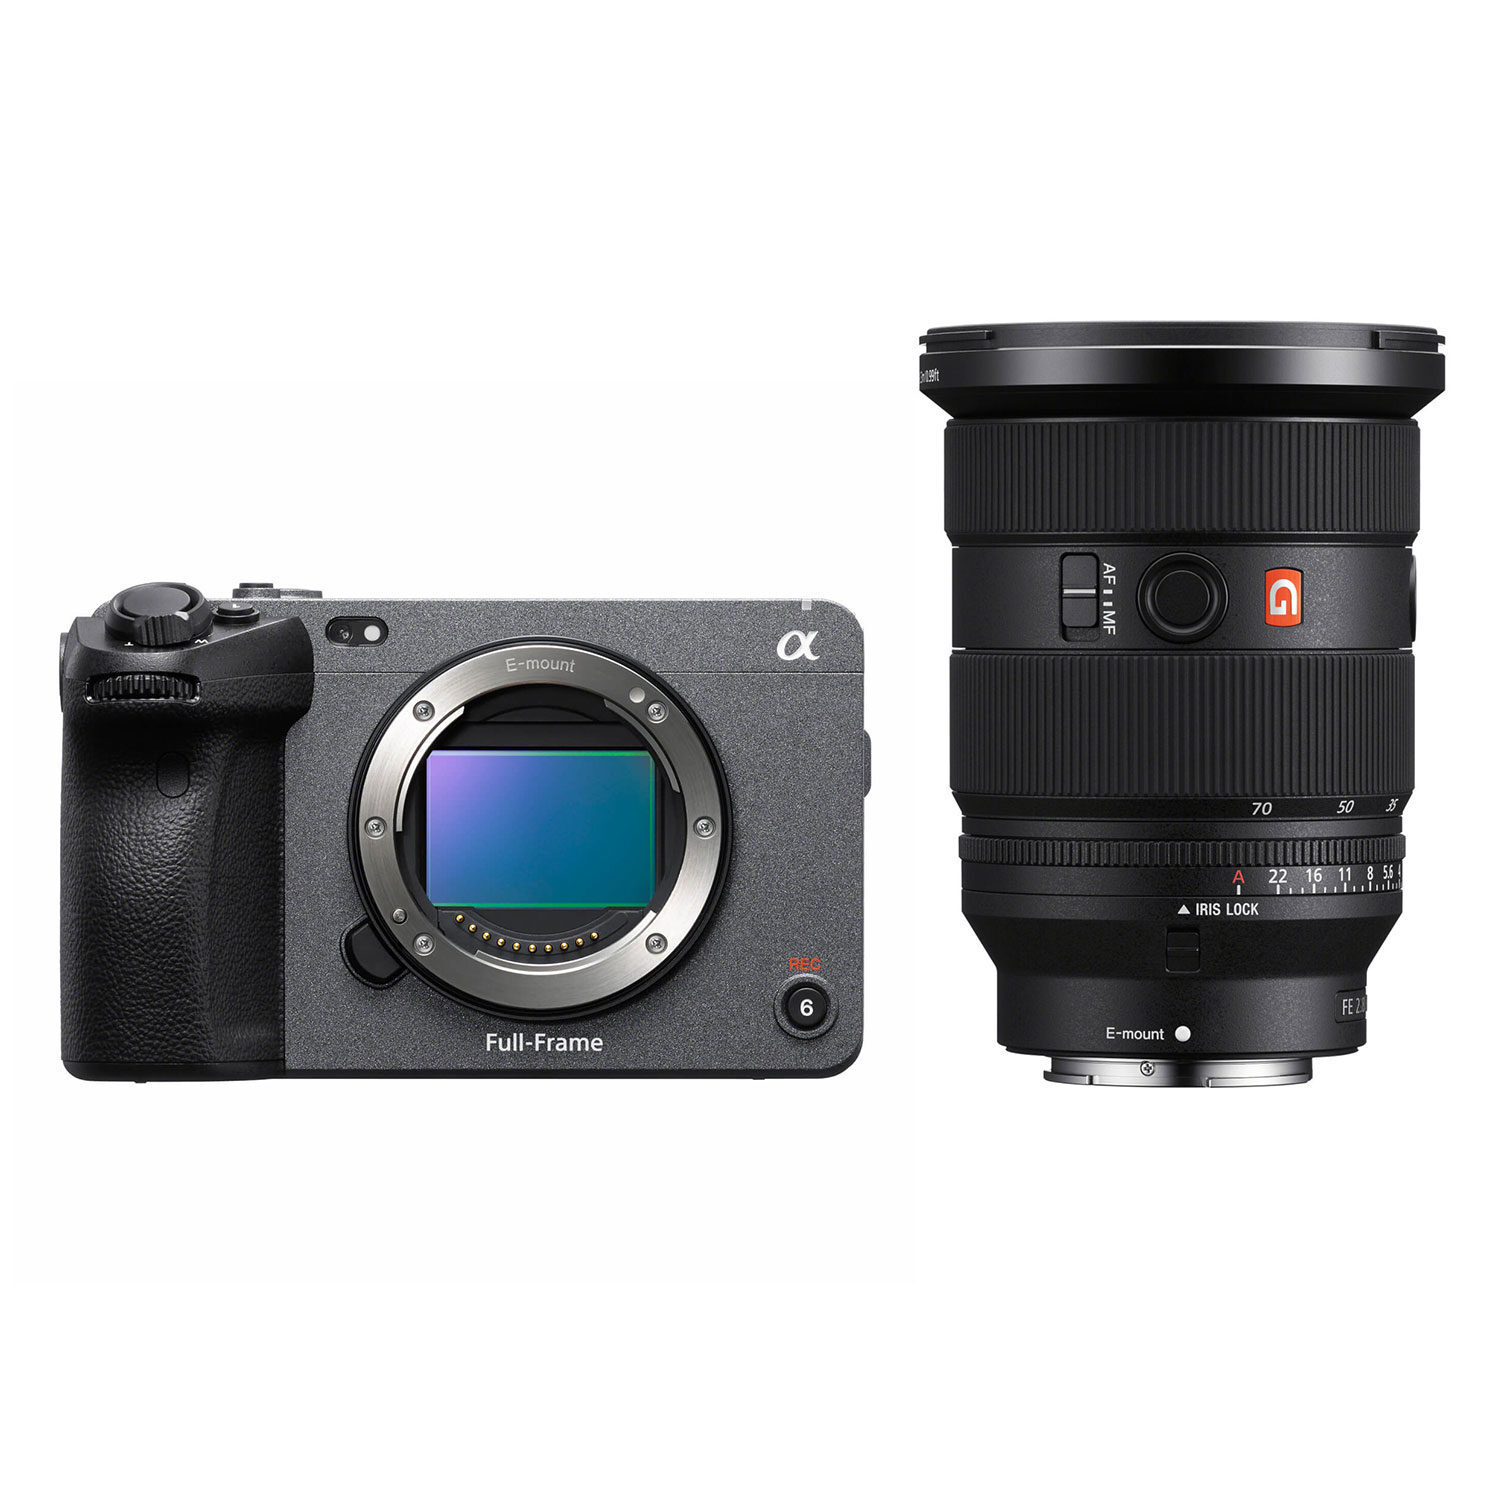 Sony Sony Cinema Line FX3 videocamera + FE 24-70mm f/2.8 GM II